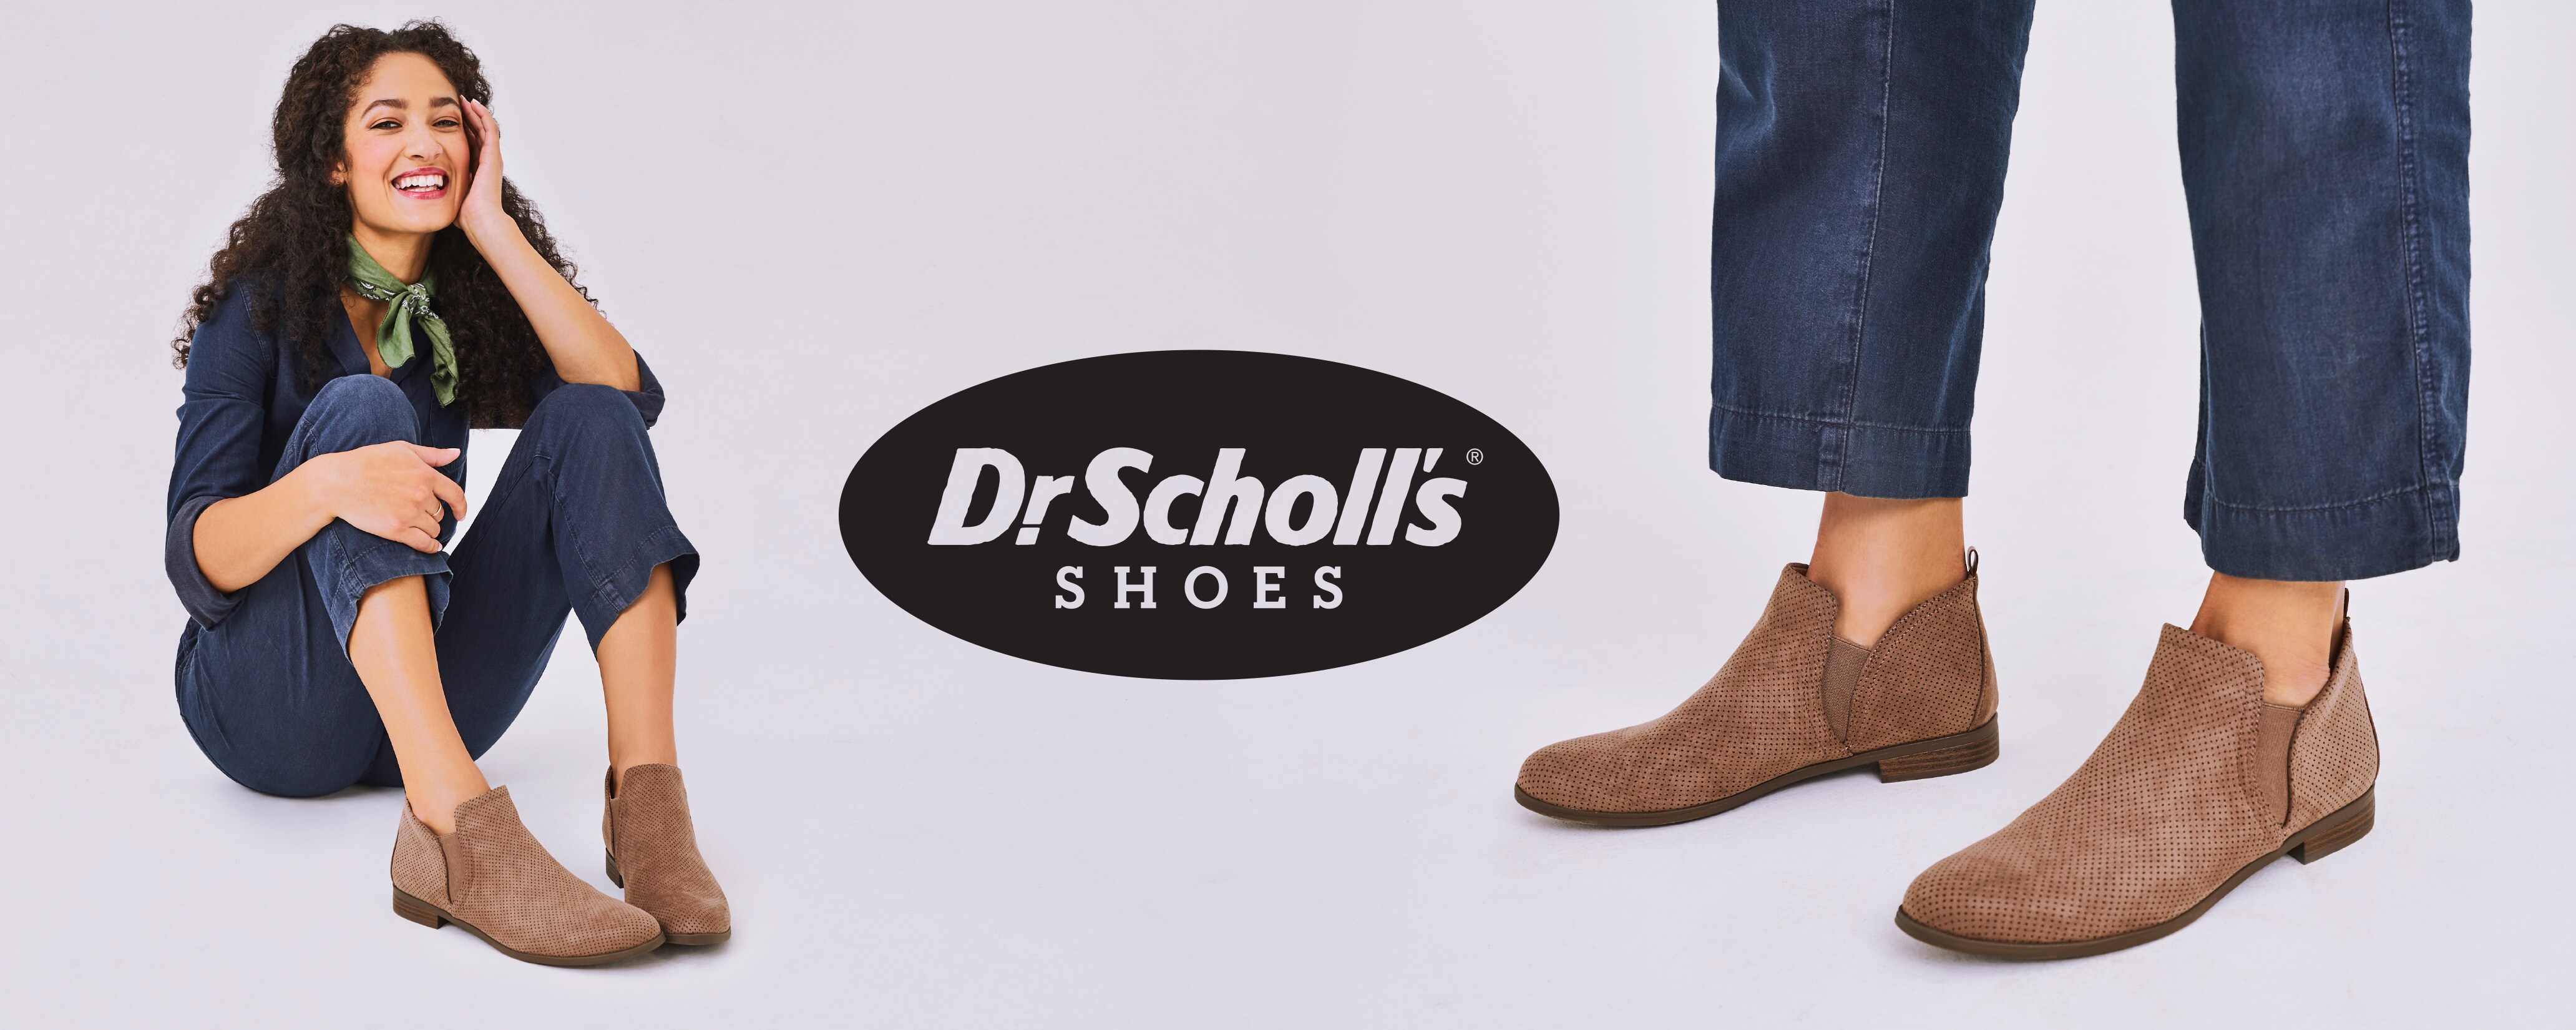 dr scholl's shoes store near me